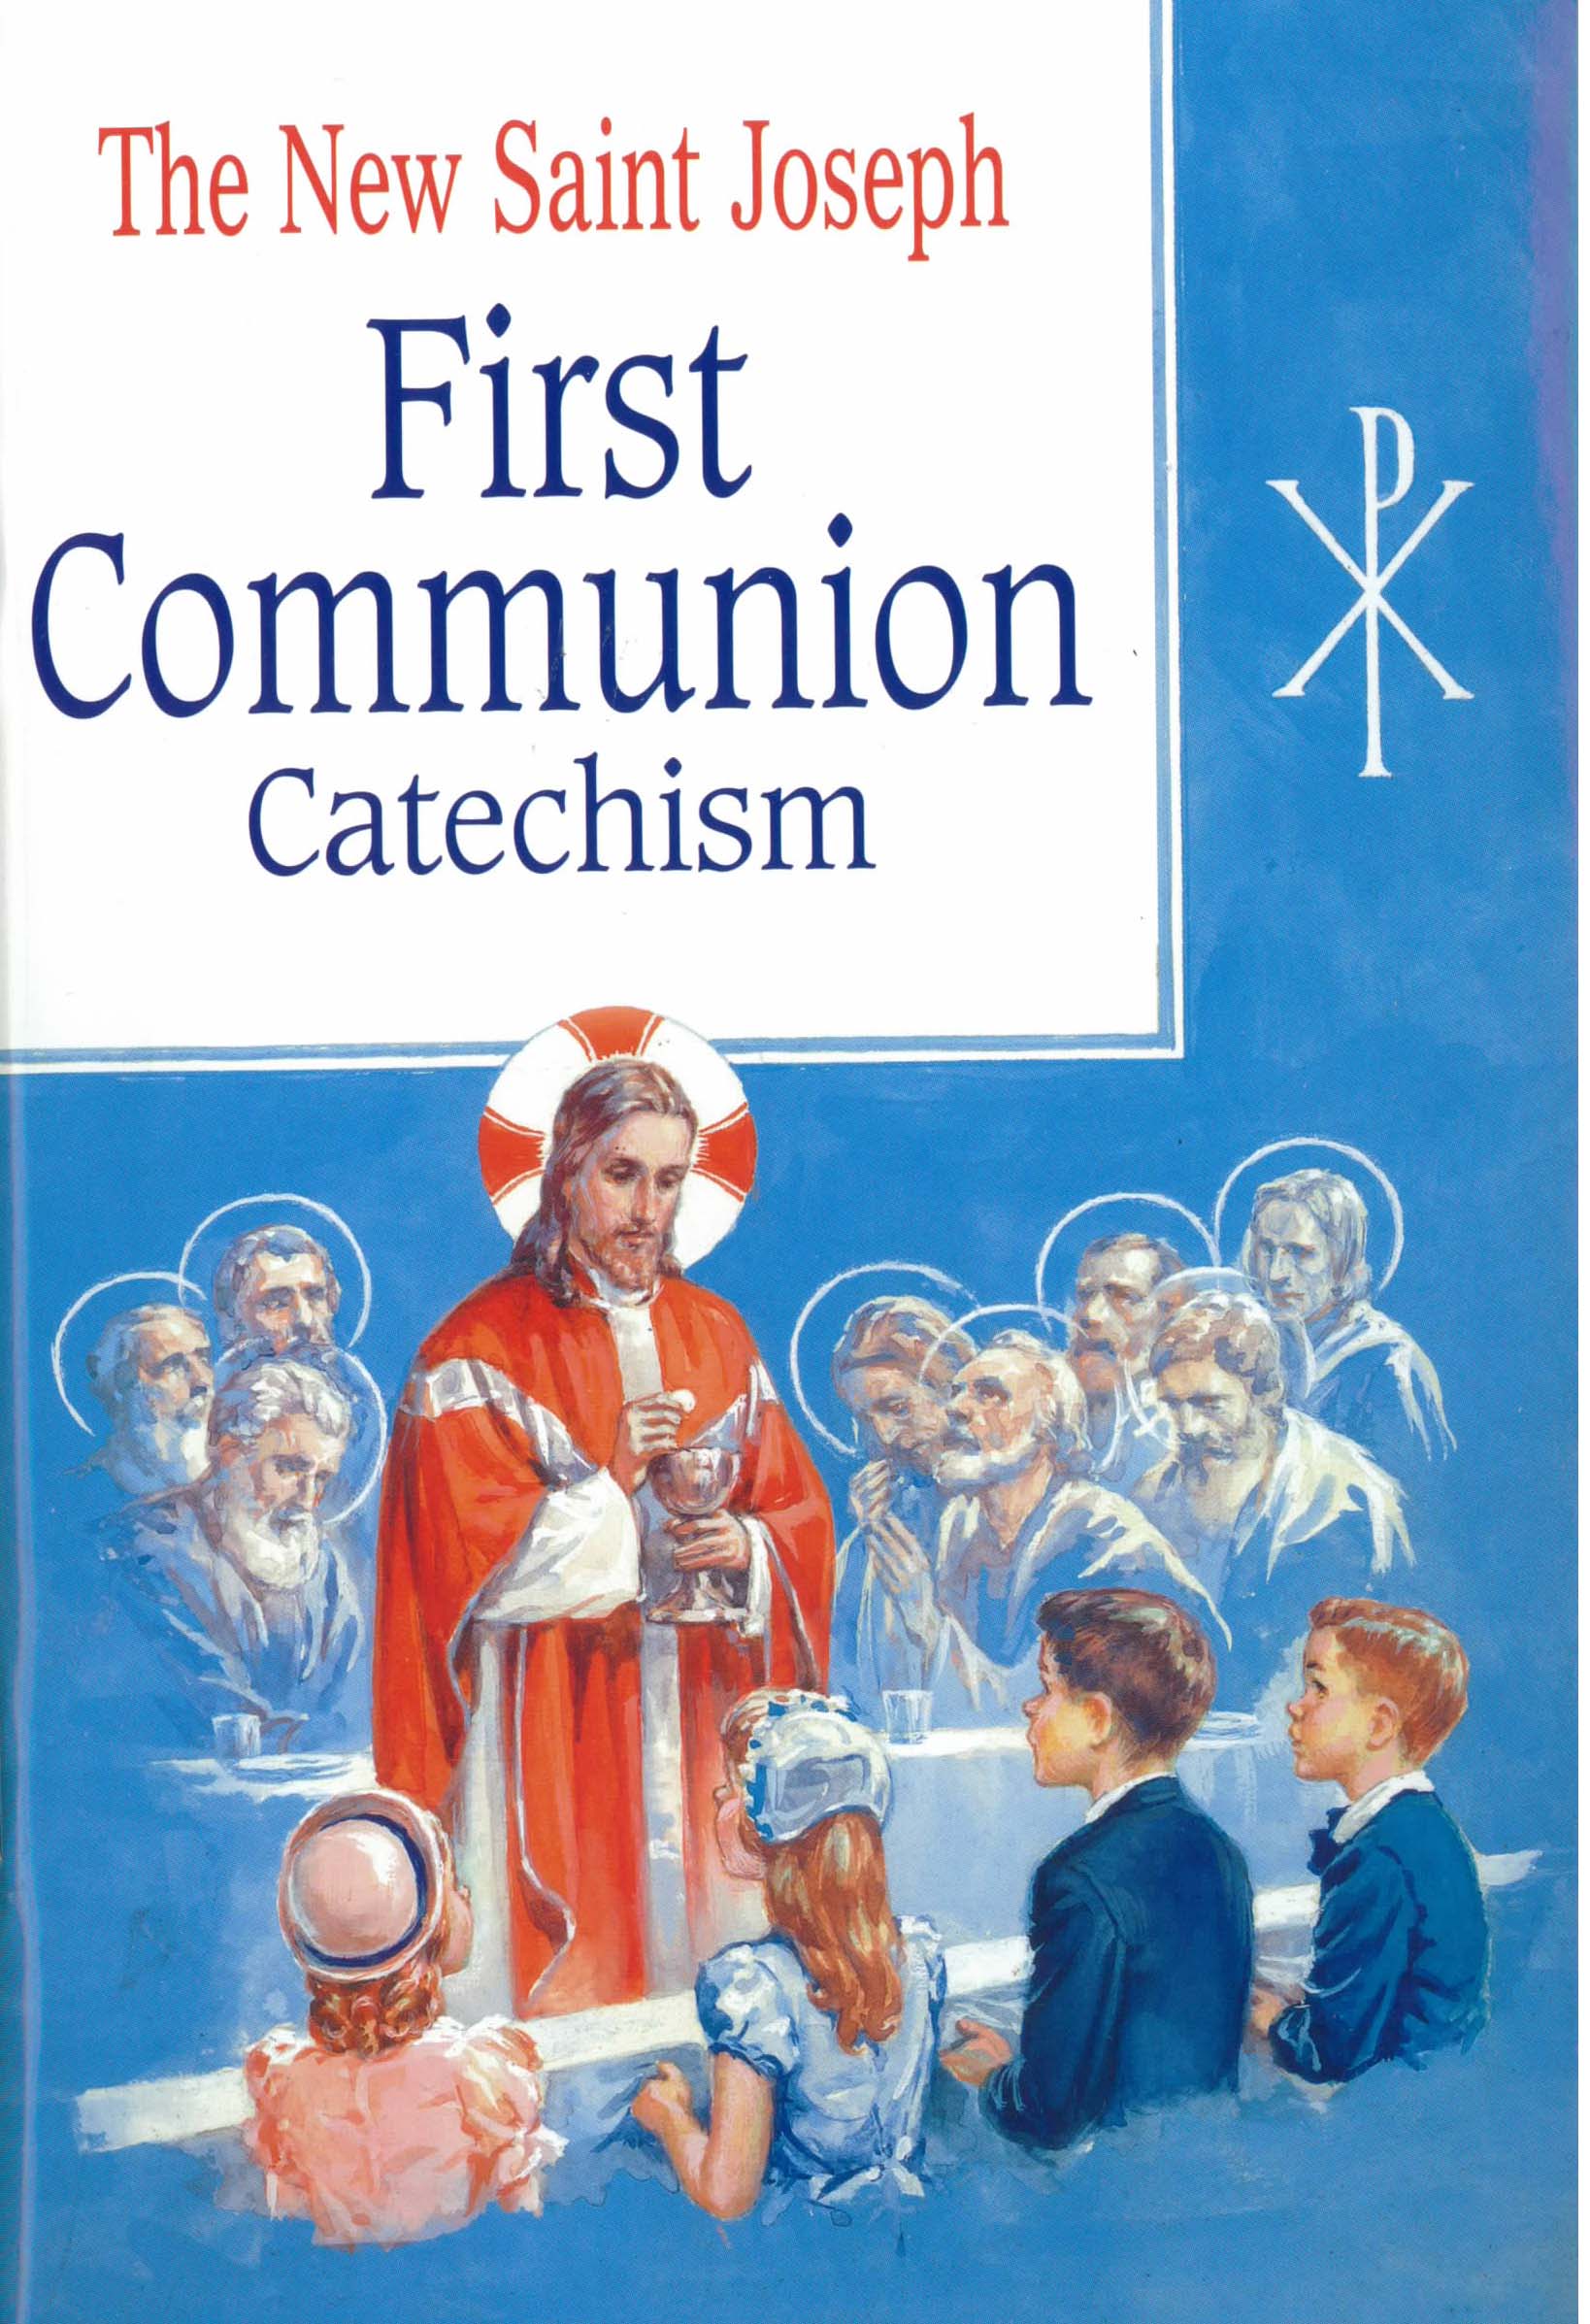  240/05 The New Saint Joseph First Communion Catechism No. 0 60-9780899422404